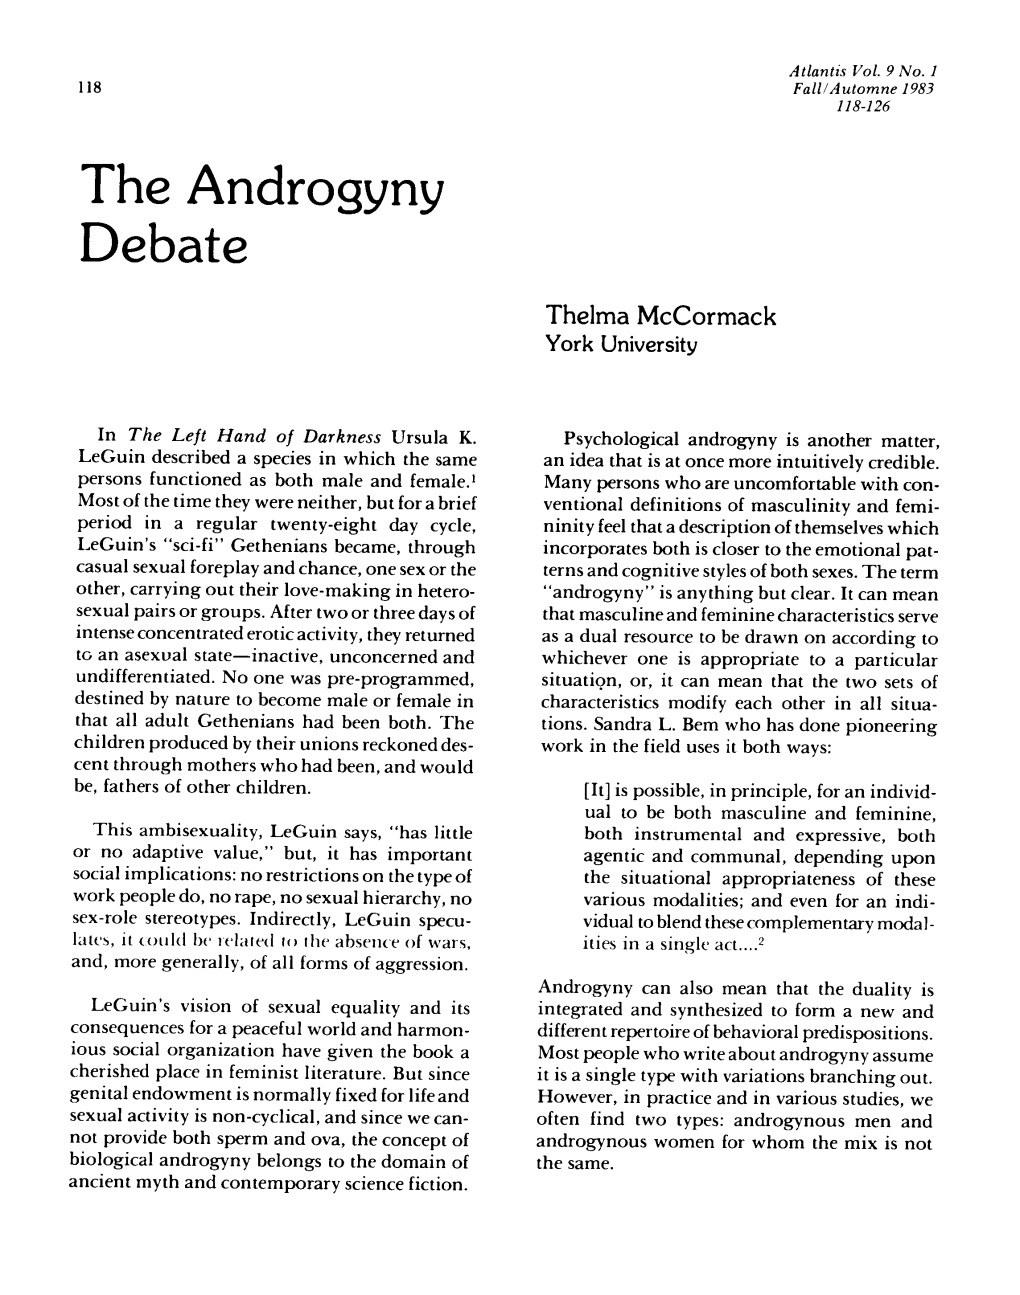 The Androgyny Debate